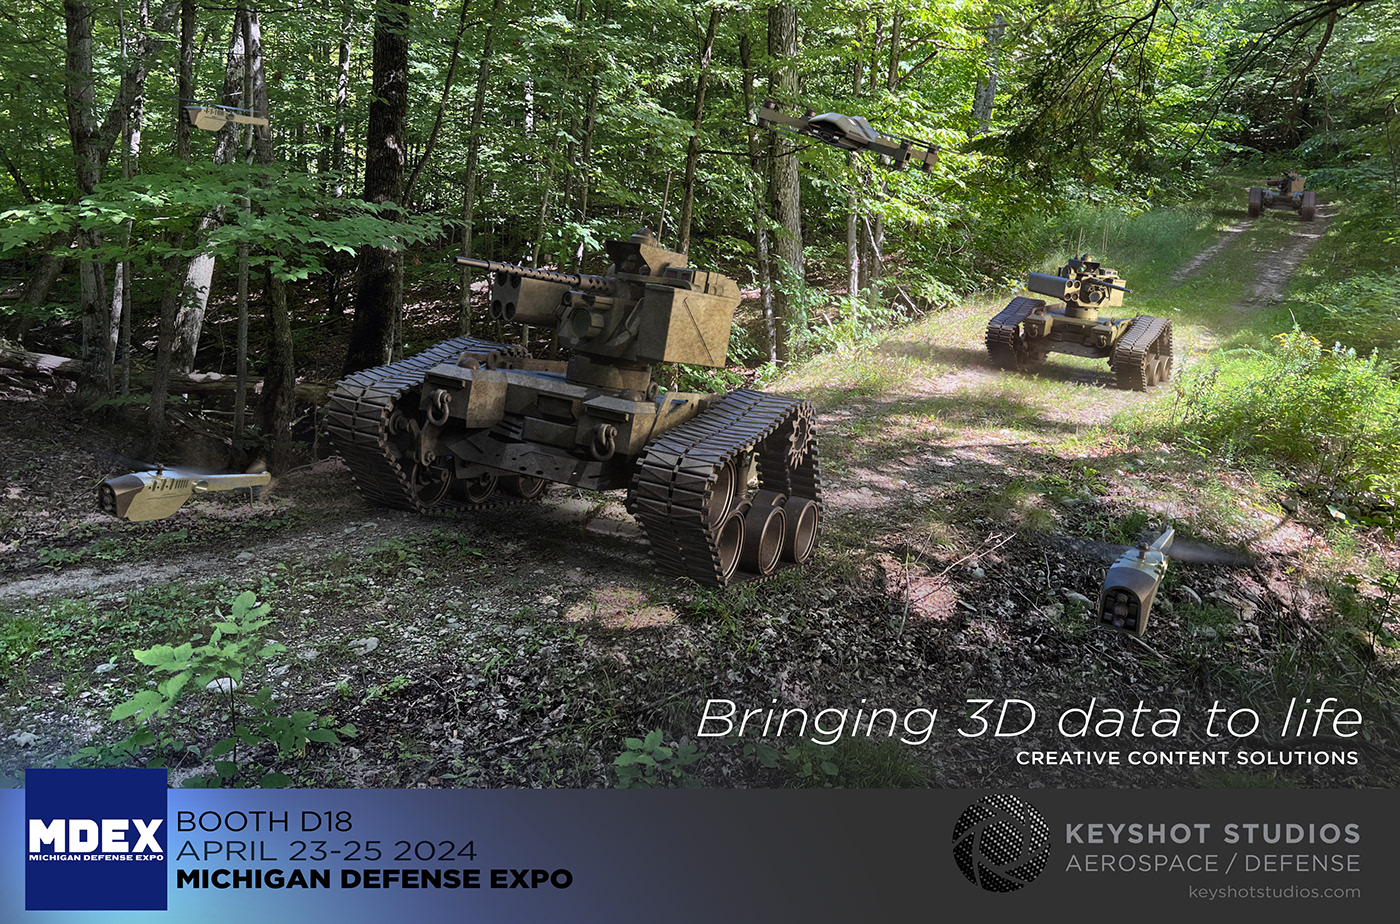 keyshot Render defense Aerospace CGI visualization storytelling   Digital Art  concept art keyshot studios